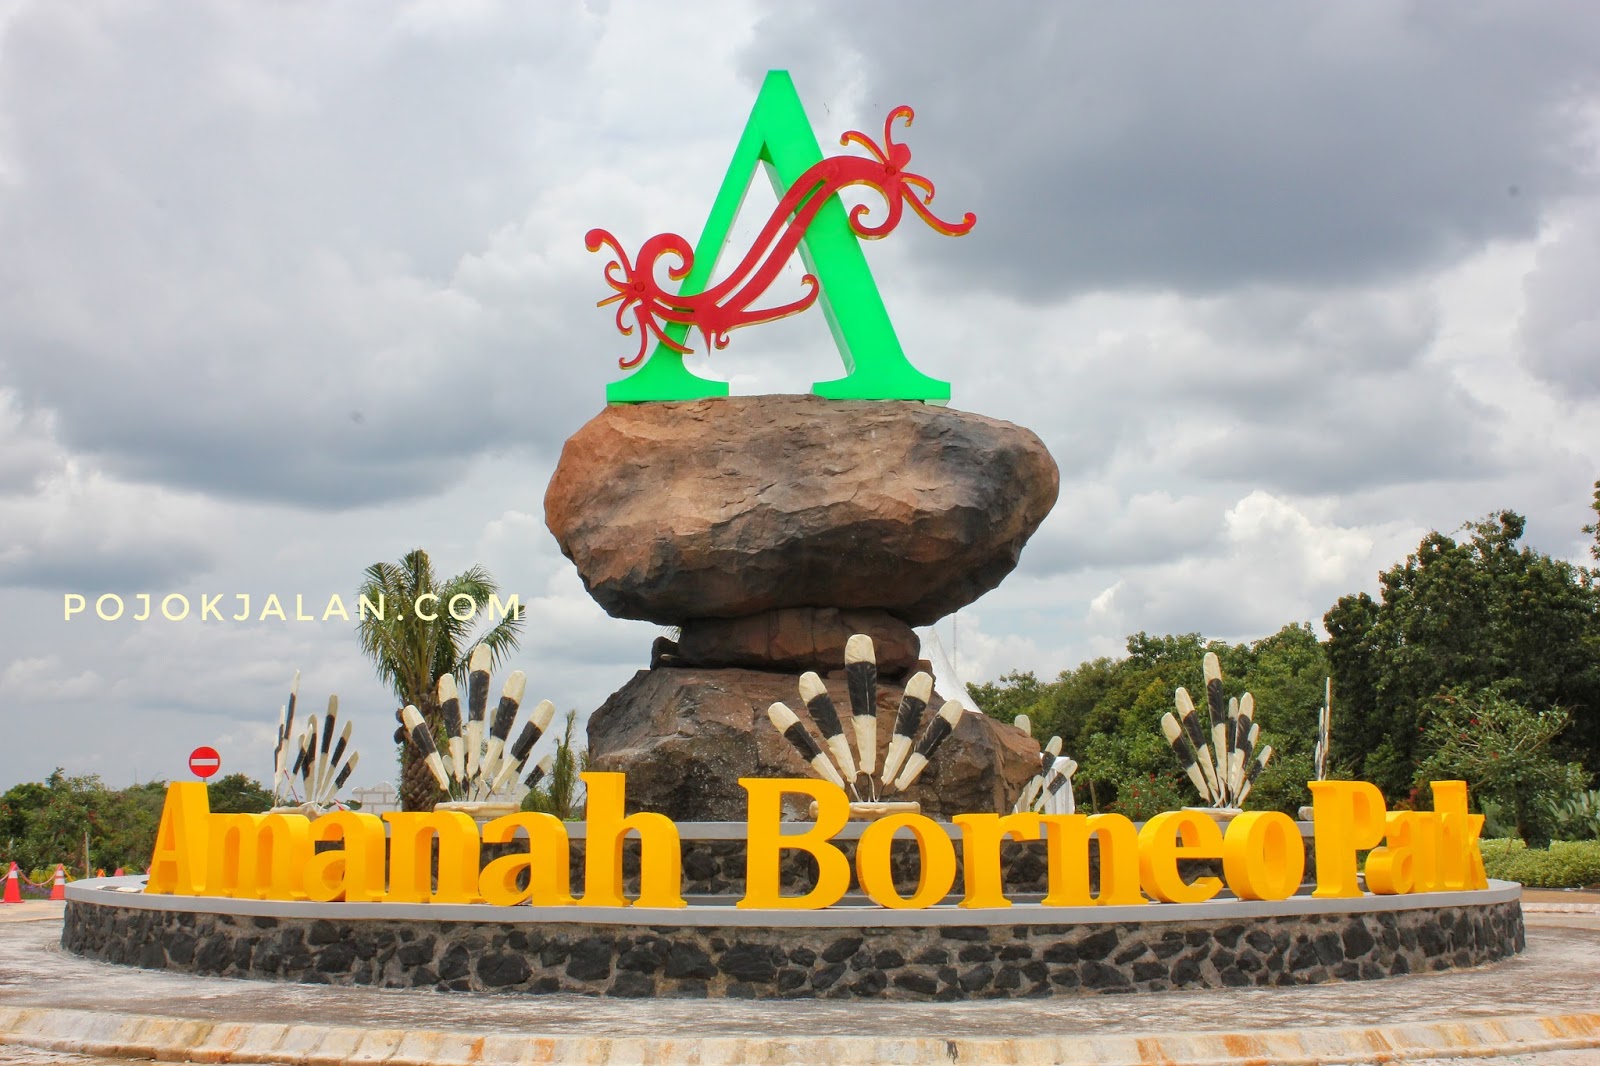 Pojok Jalan Amanah Borneo Park Tempat Wisata Edukasi Dan